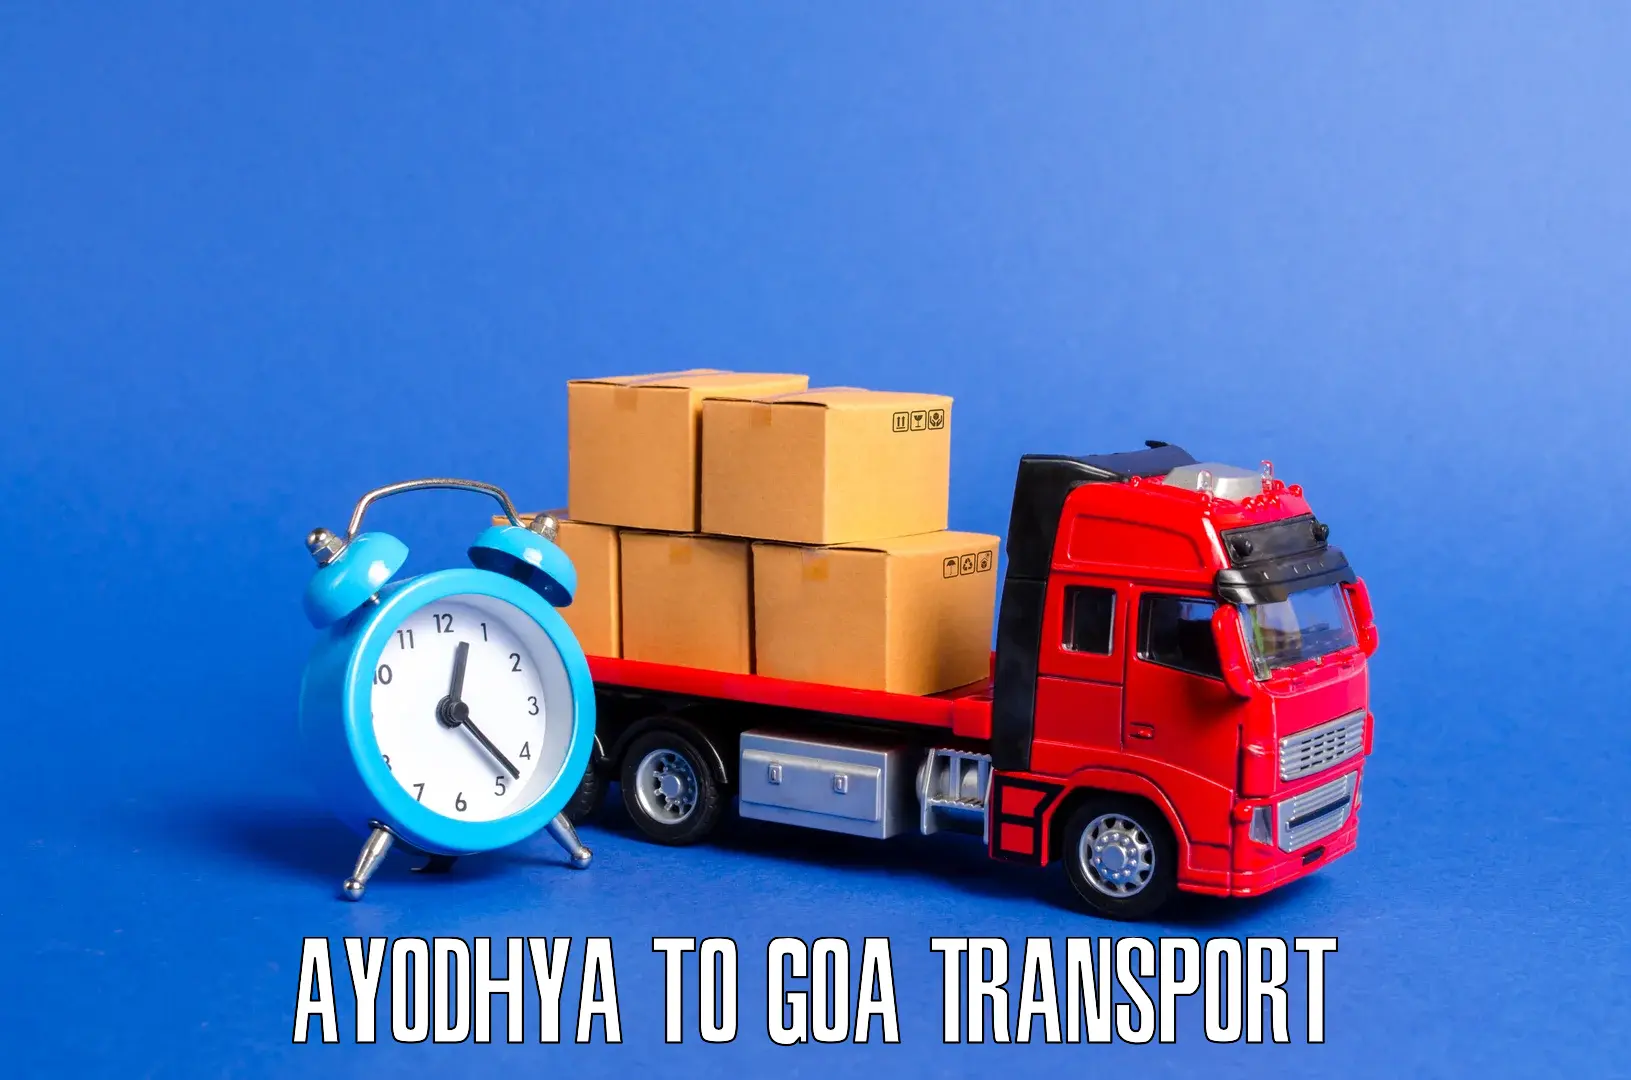 Sending bike to another city Ayodhya to Goa